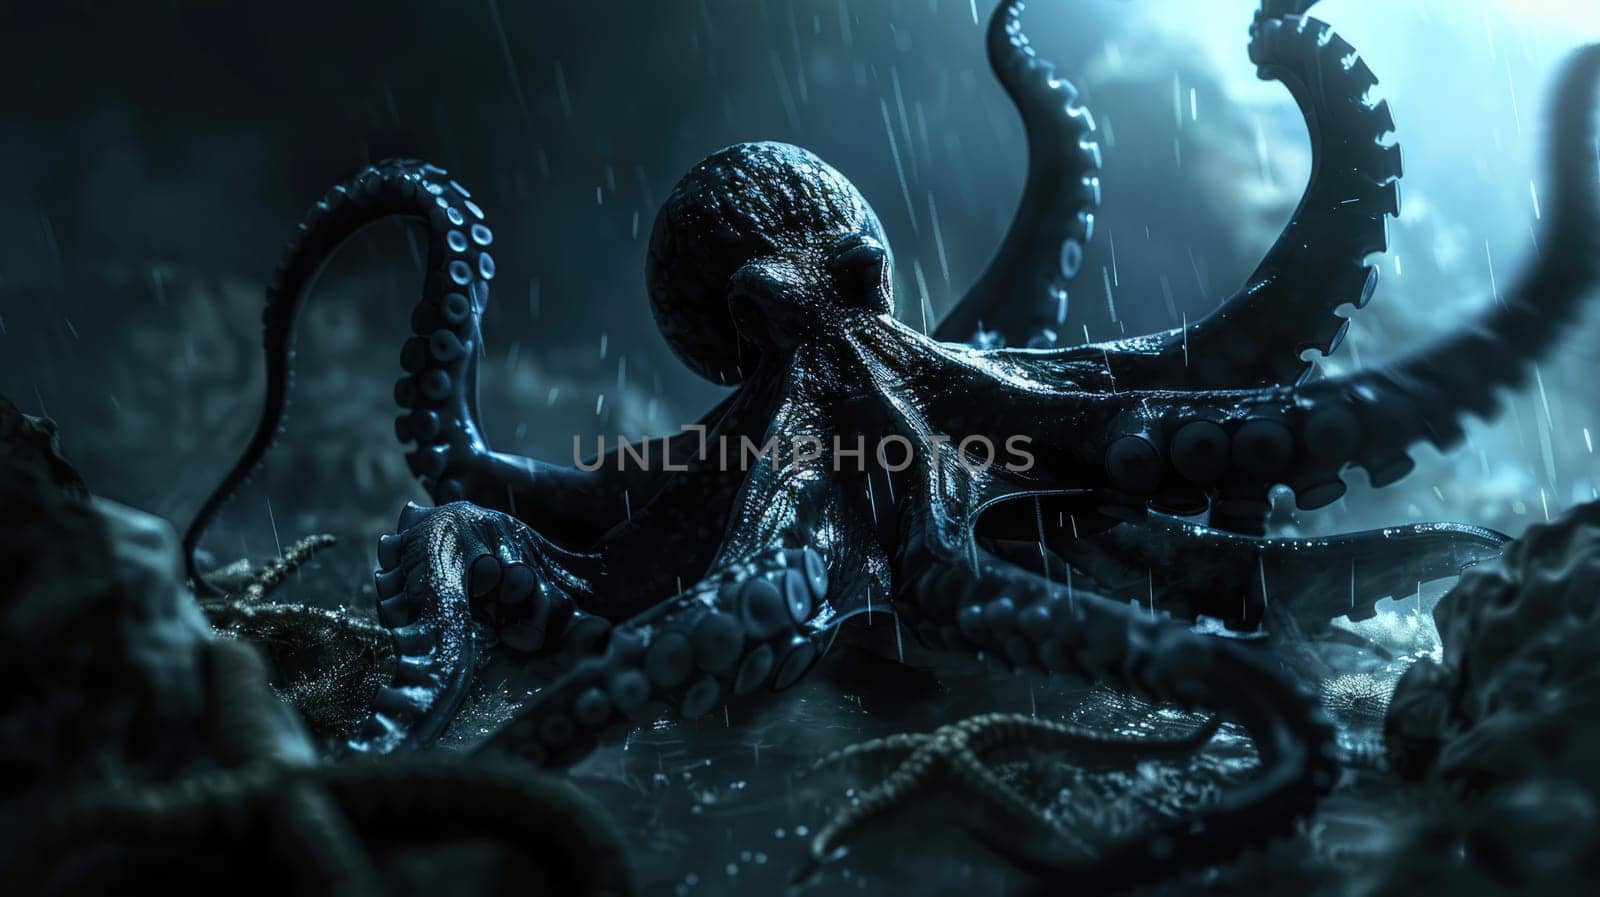 Octopus. Huge Kraken. Monster attacking ships in a storm by natali_brill